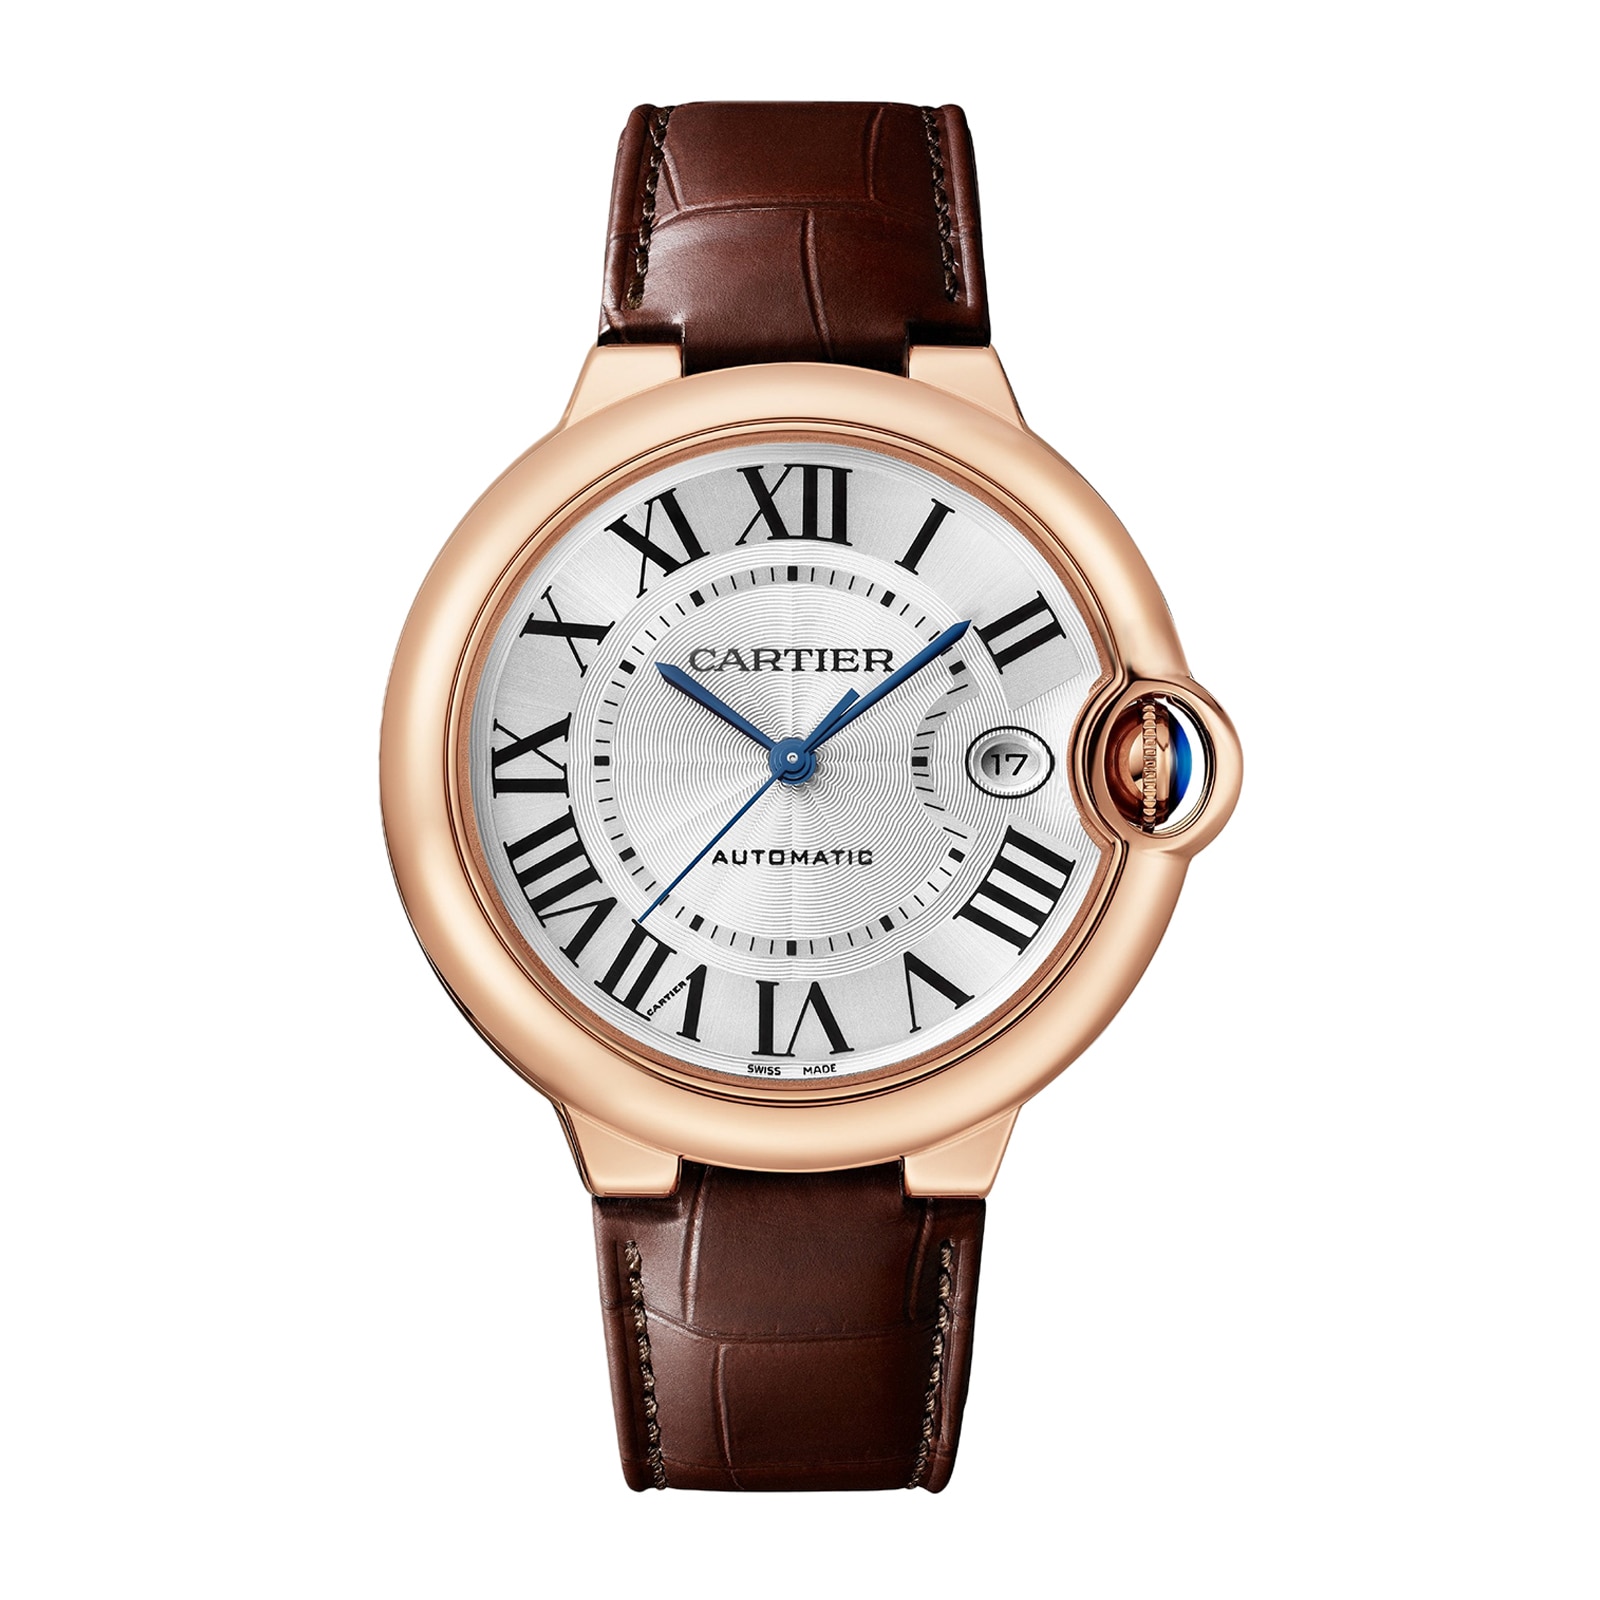 Ballon Bleu De Cartier Watch, 40mm, Automatic Movement, 18k Rose Gold, Leather